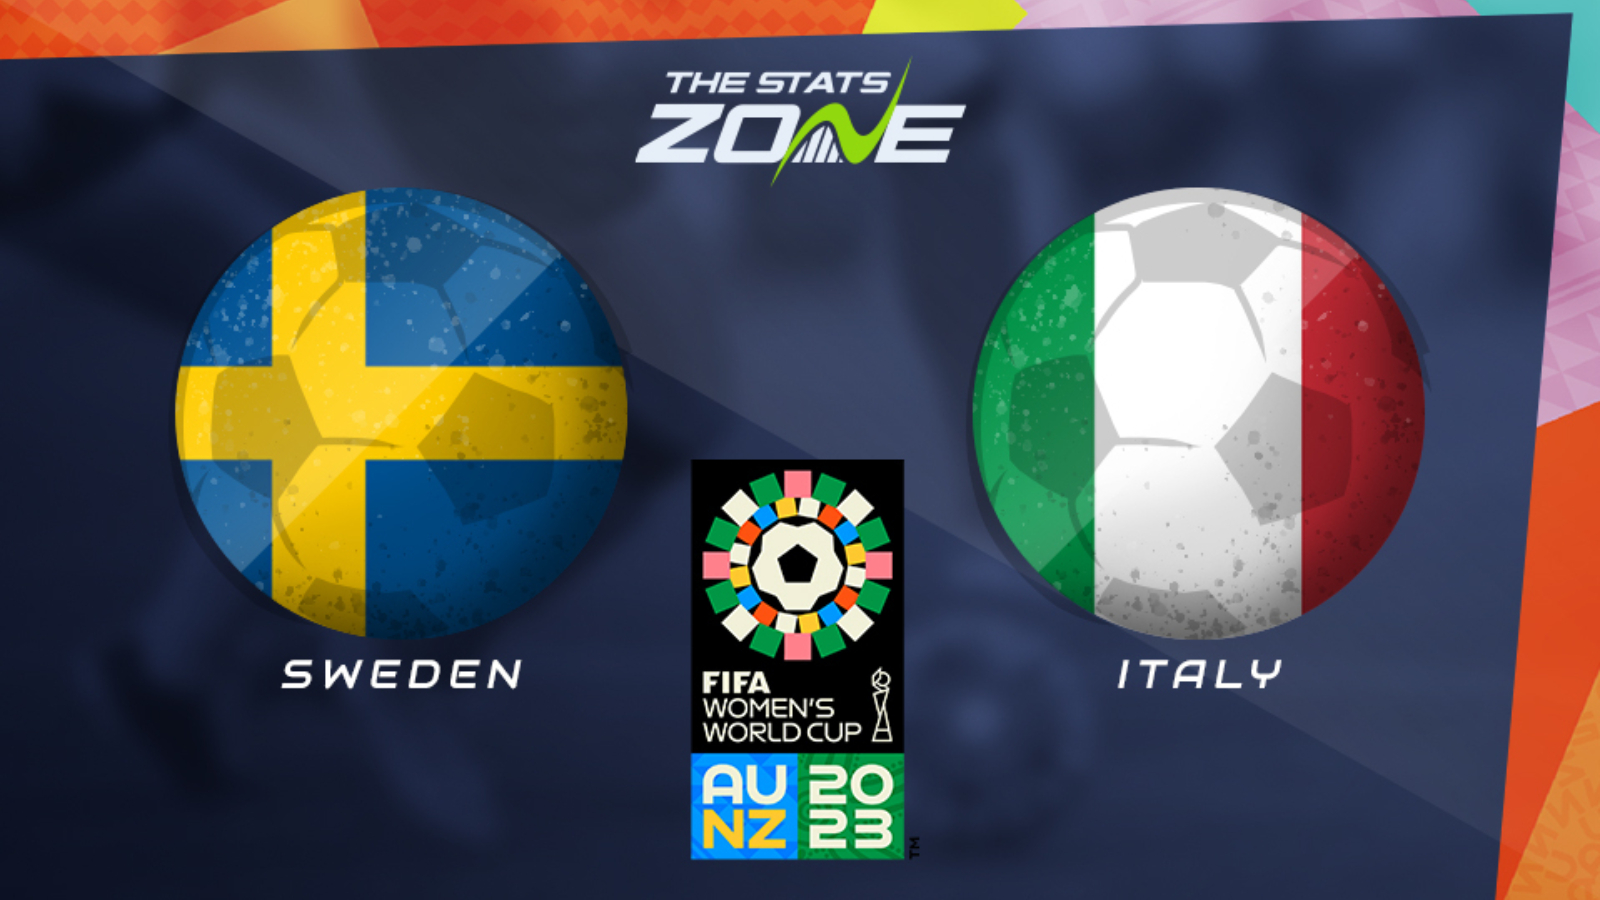 Photo: italy vs sweden prediction